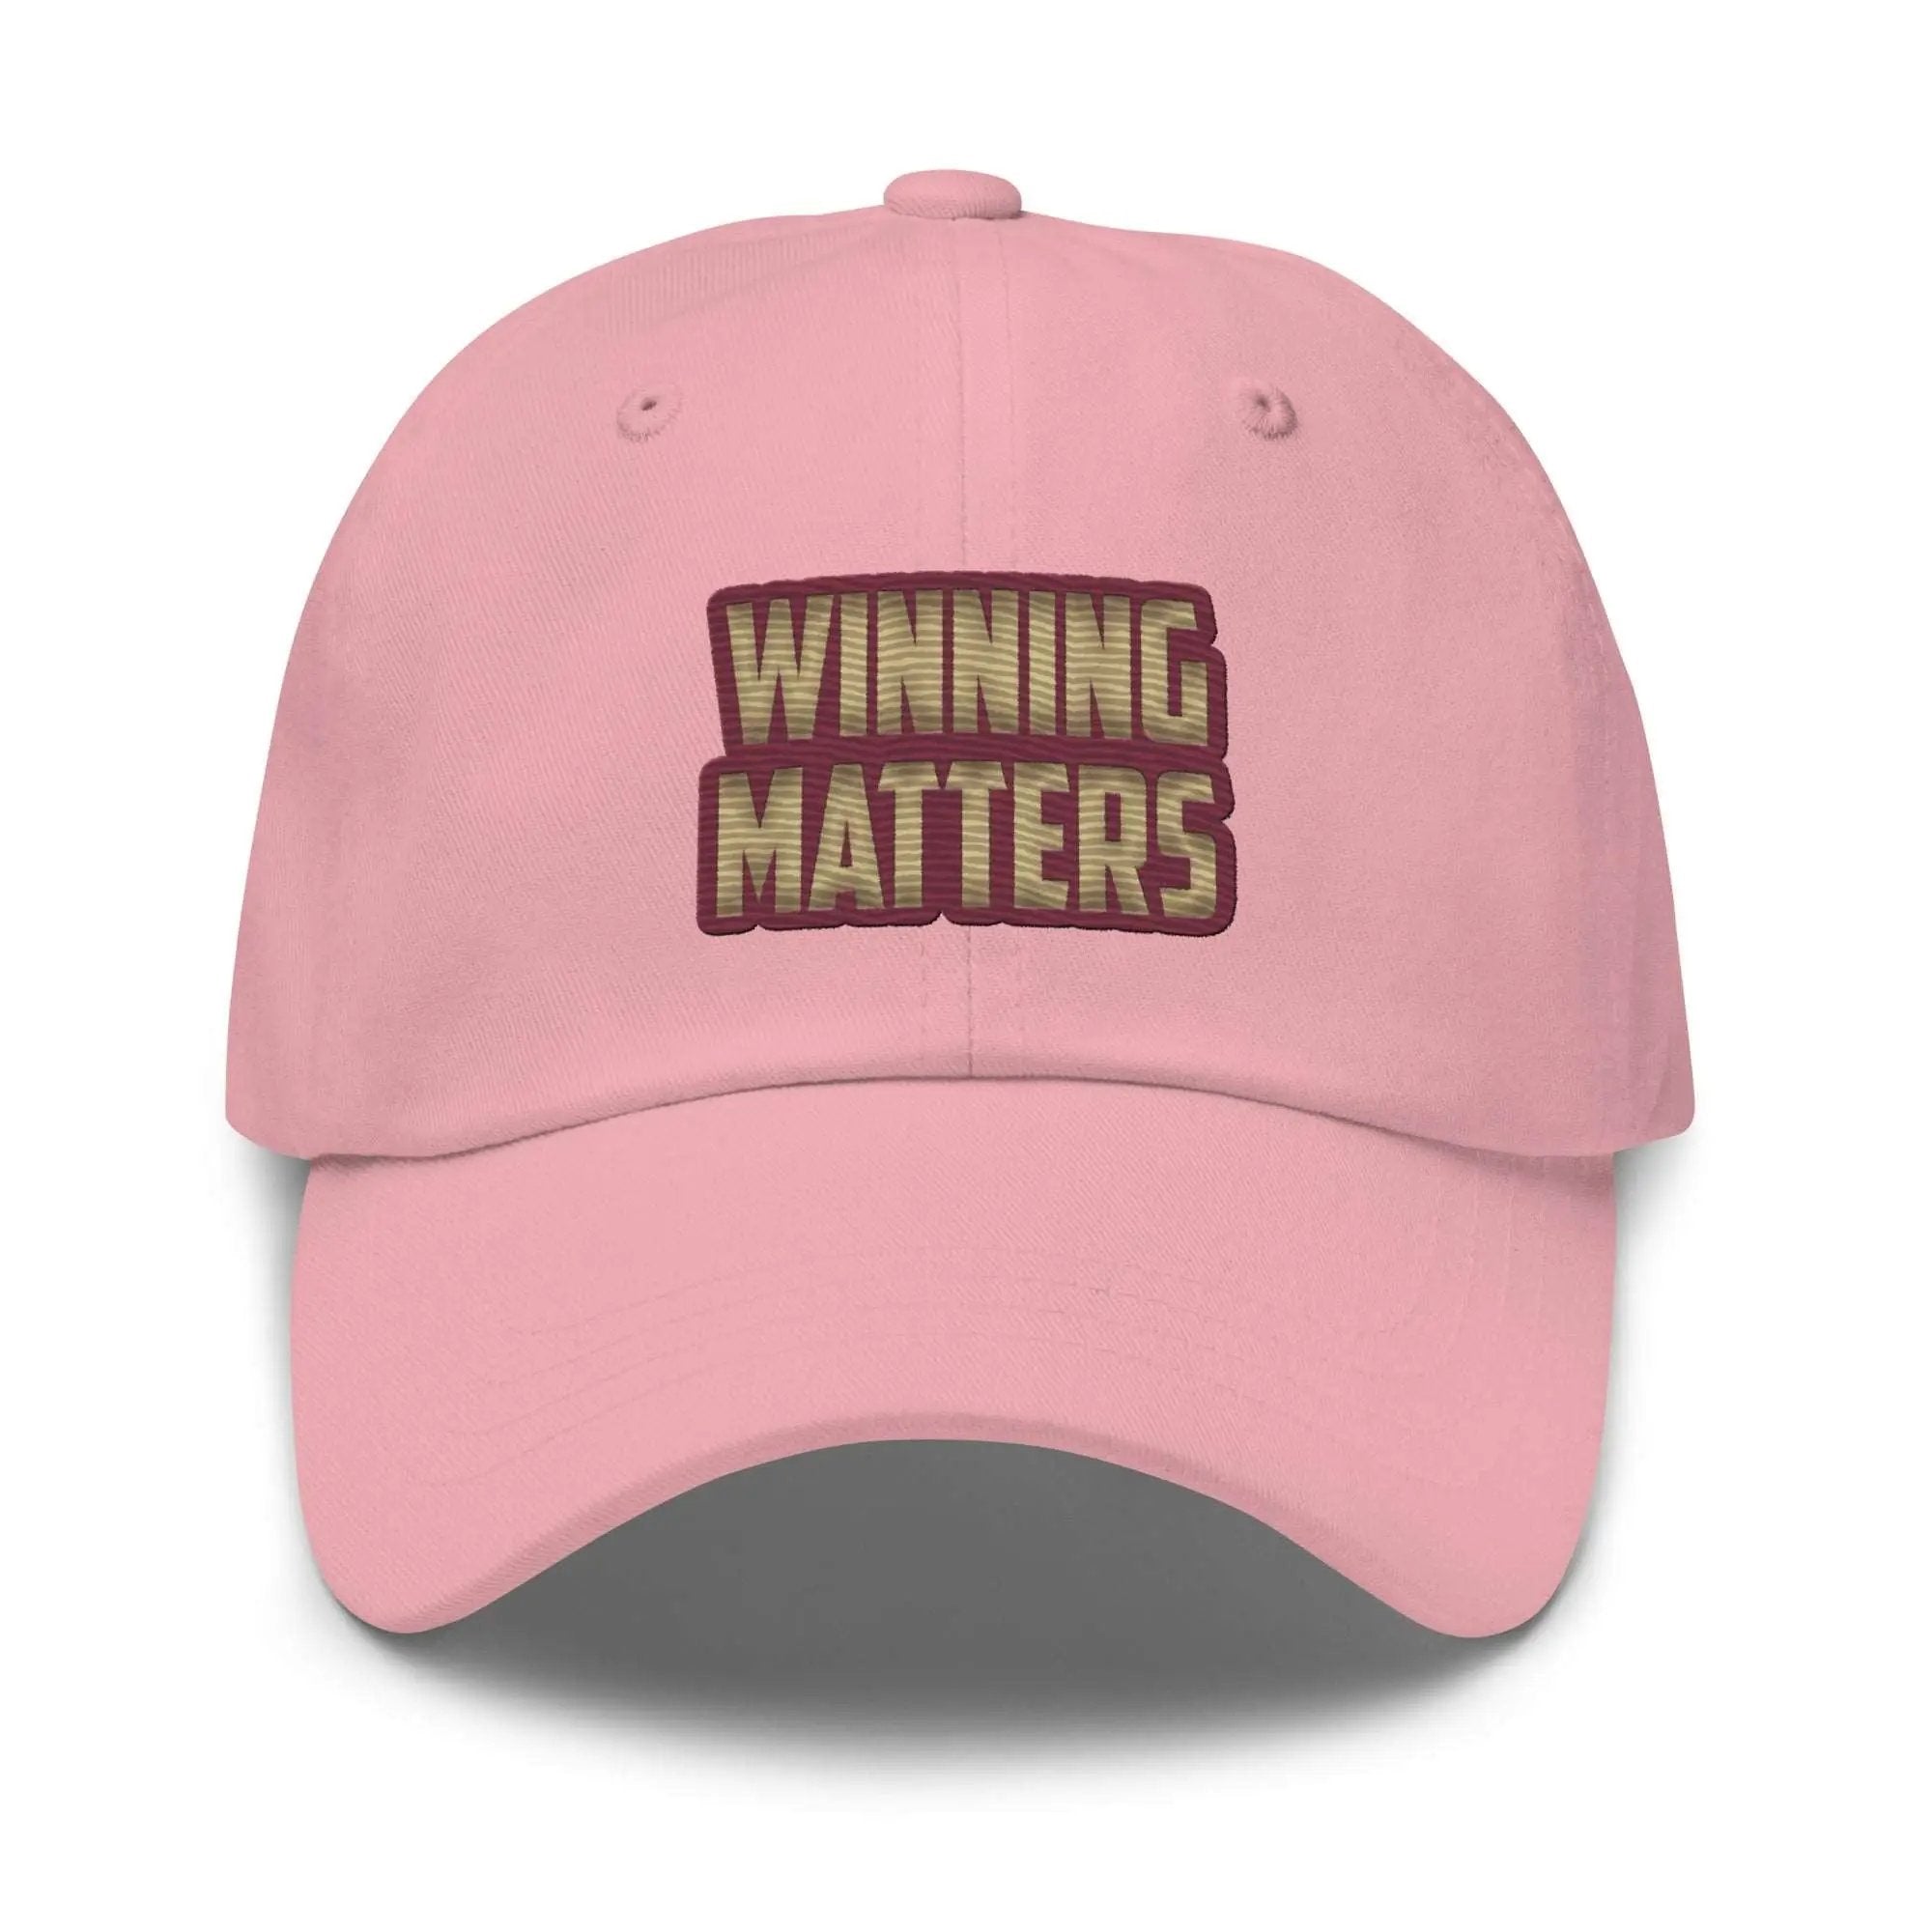 Winning Matters Dad hat